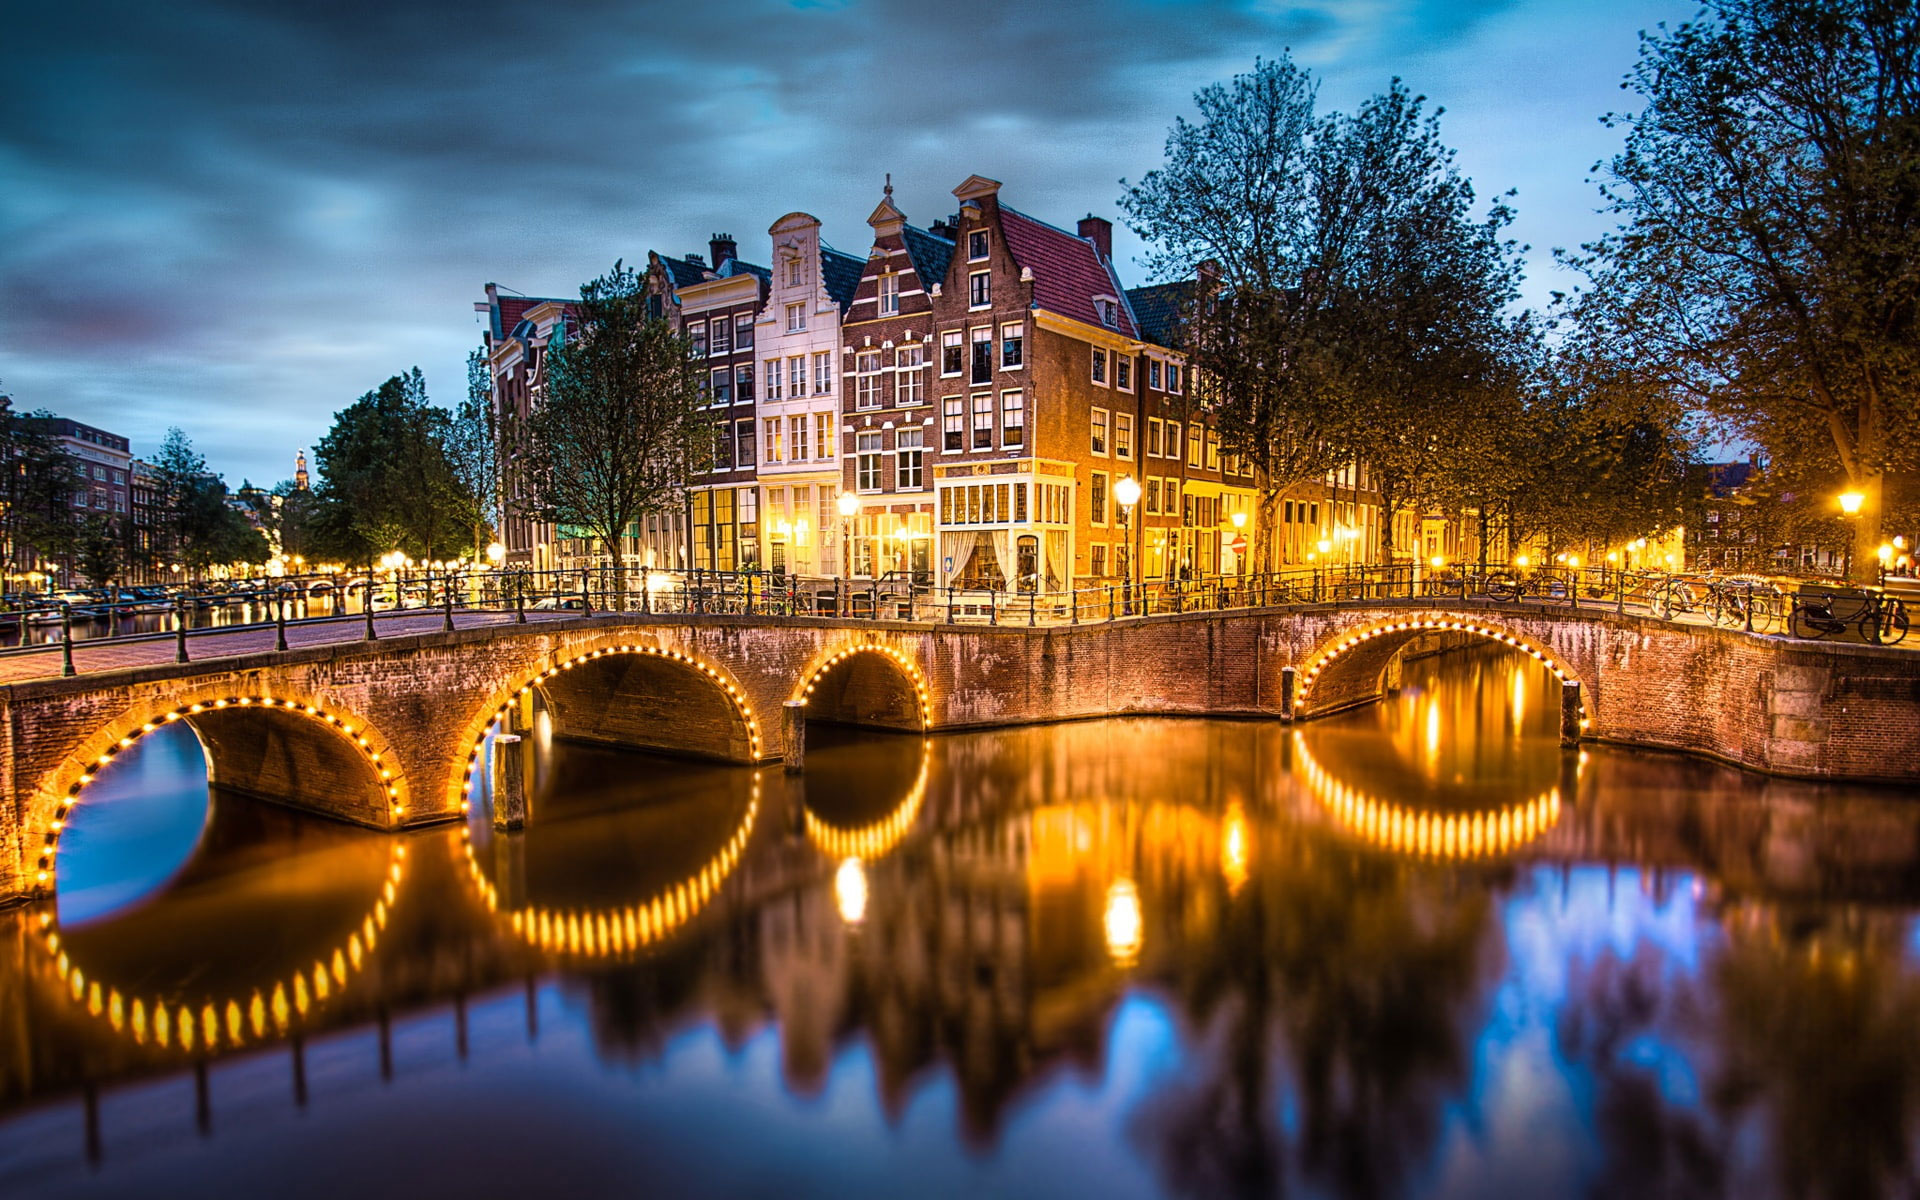 Amsterdam wallpaper, Nederland, city, evening, lights, river, bridge, houses, trees